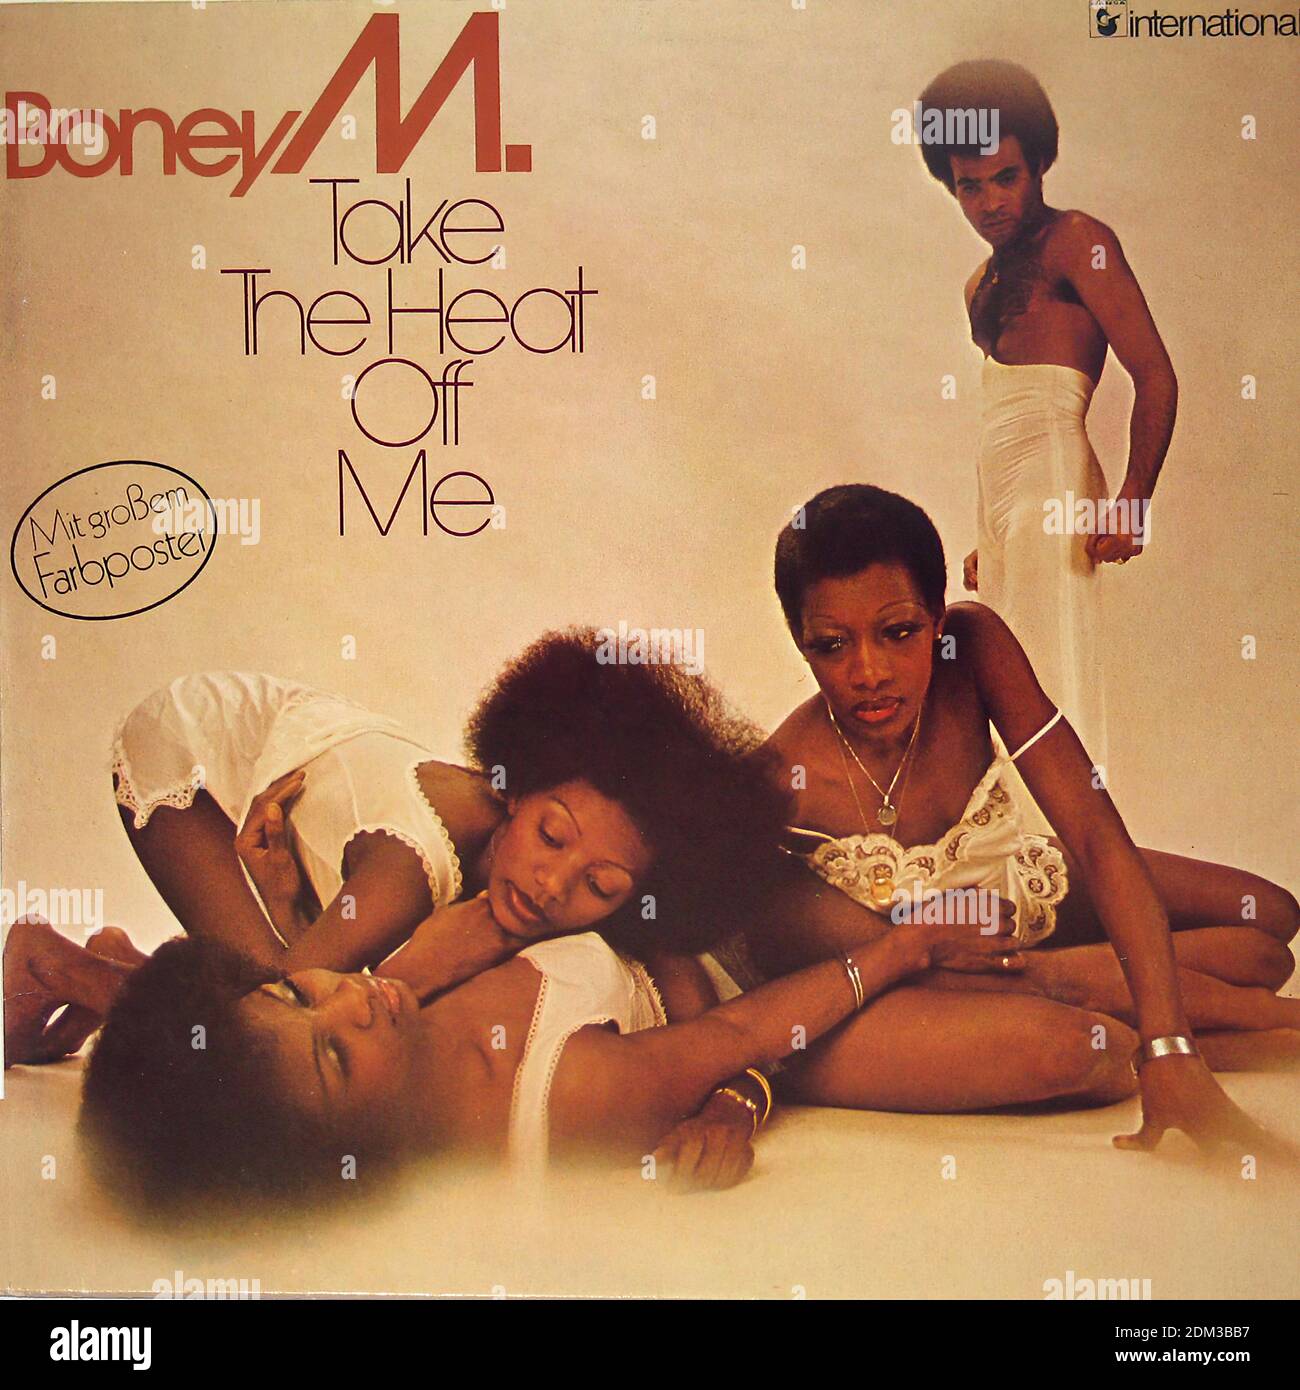 Boney M Take The Heat Off Me + Poster - Vintage Vinyl Record Cover Stock  Photo - Alamy